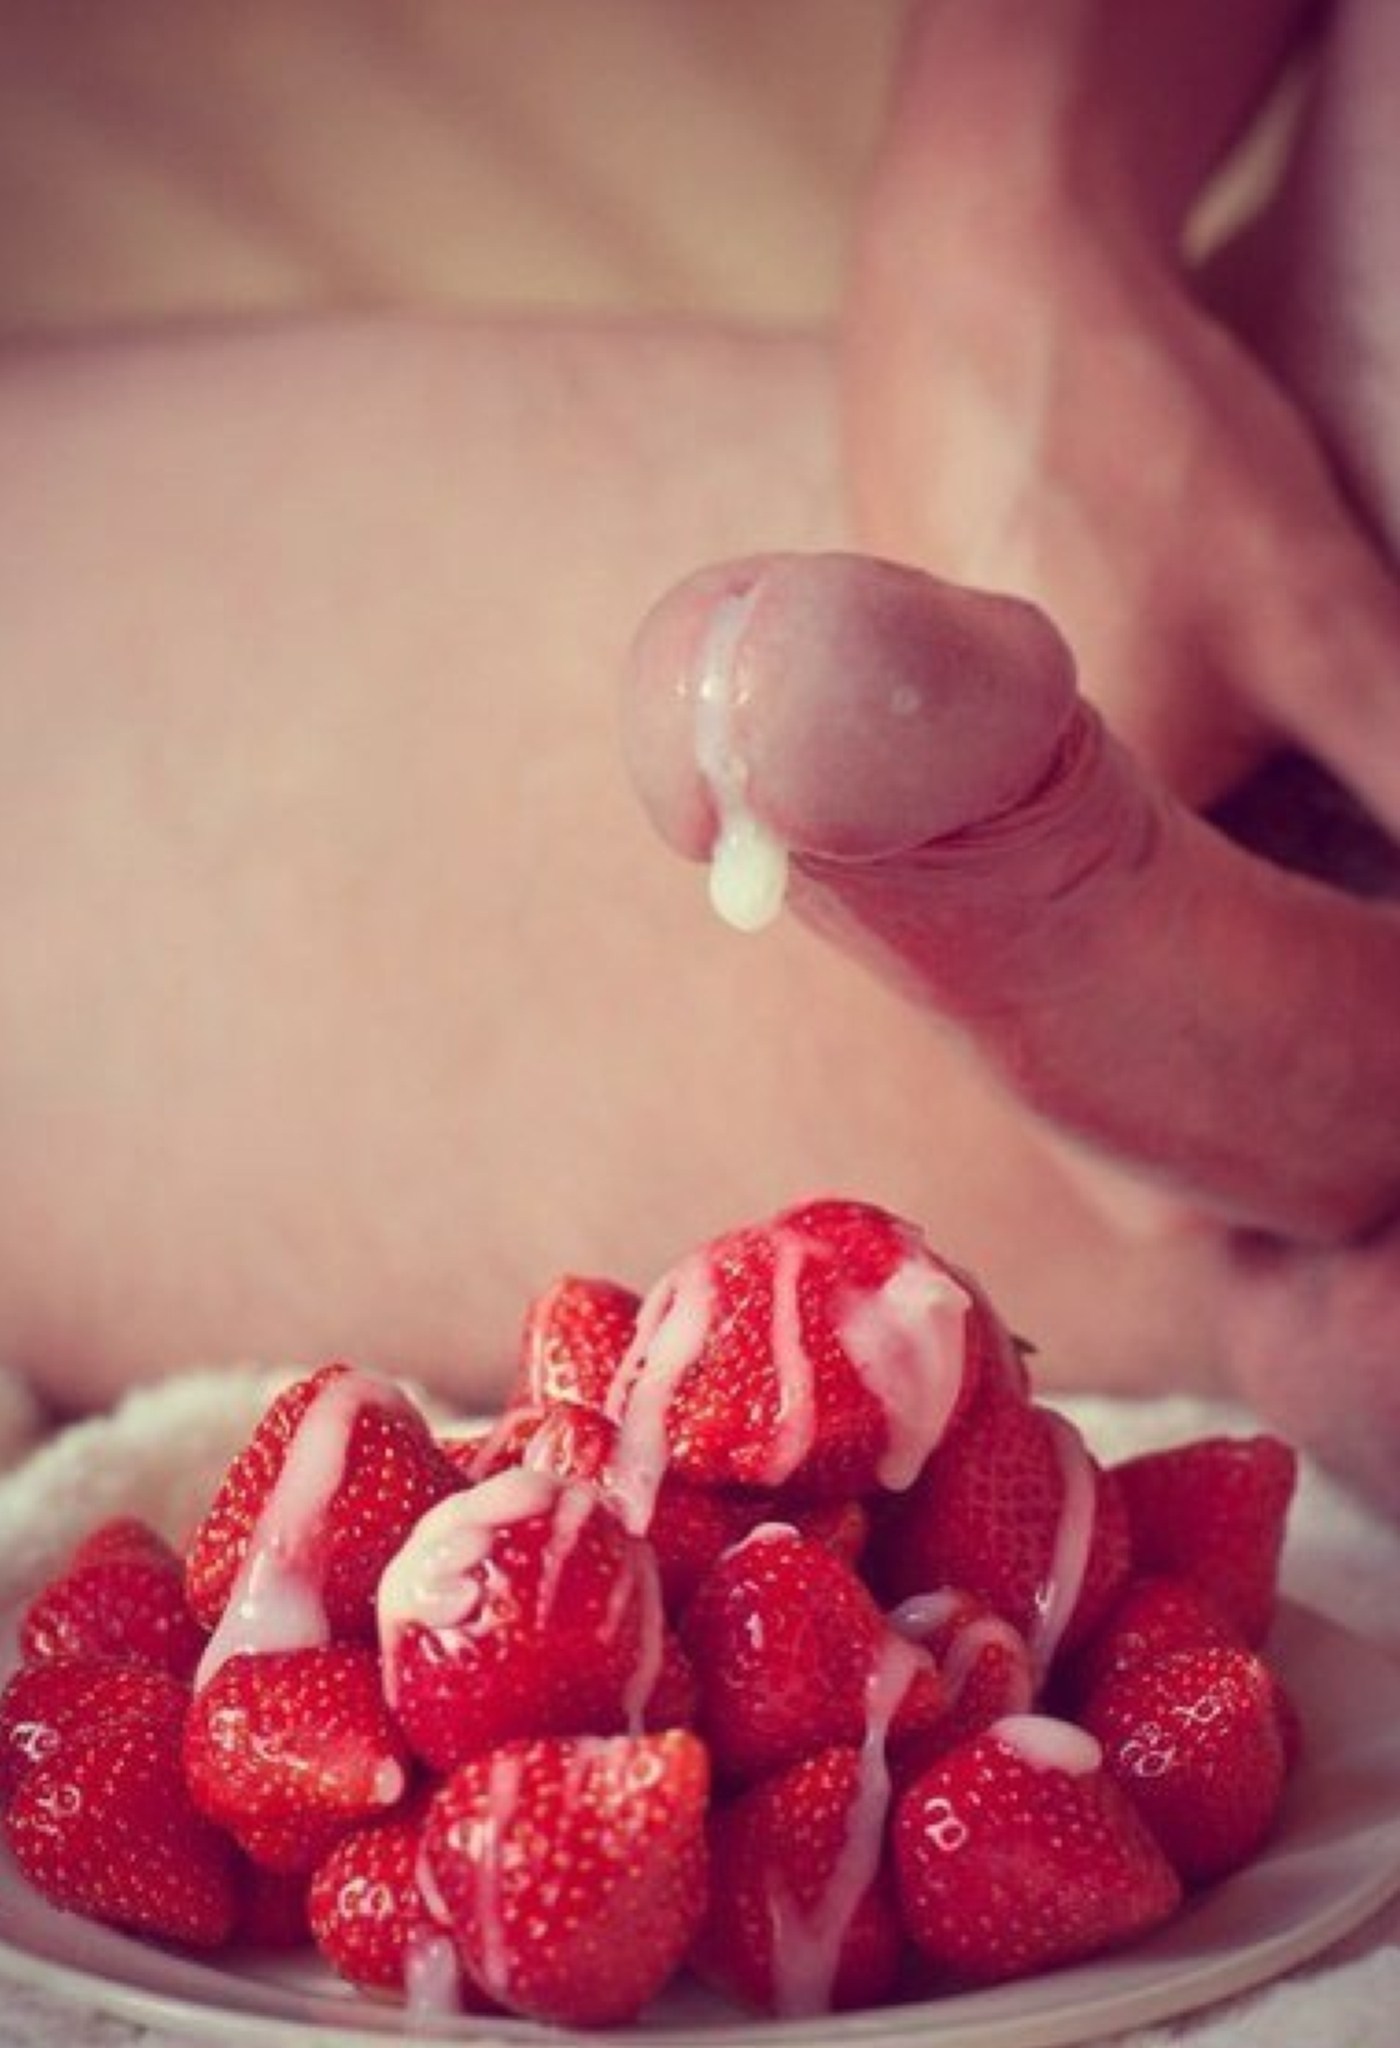 Strawberry porn